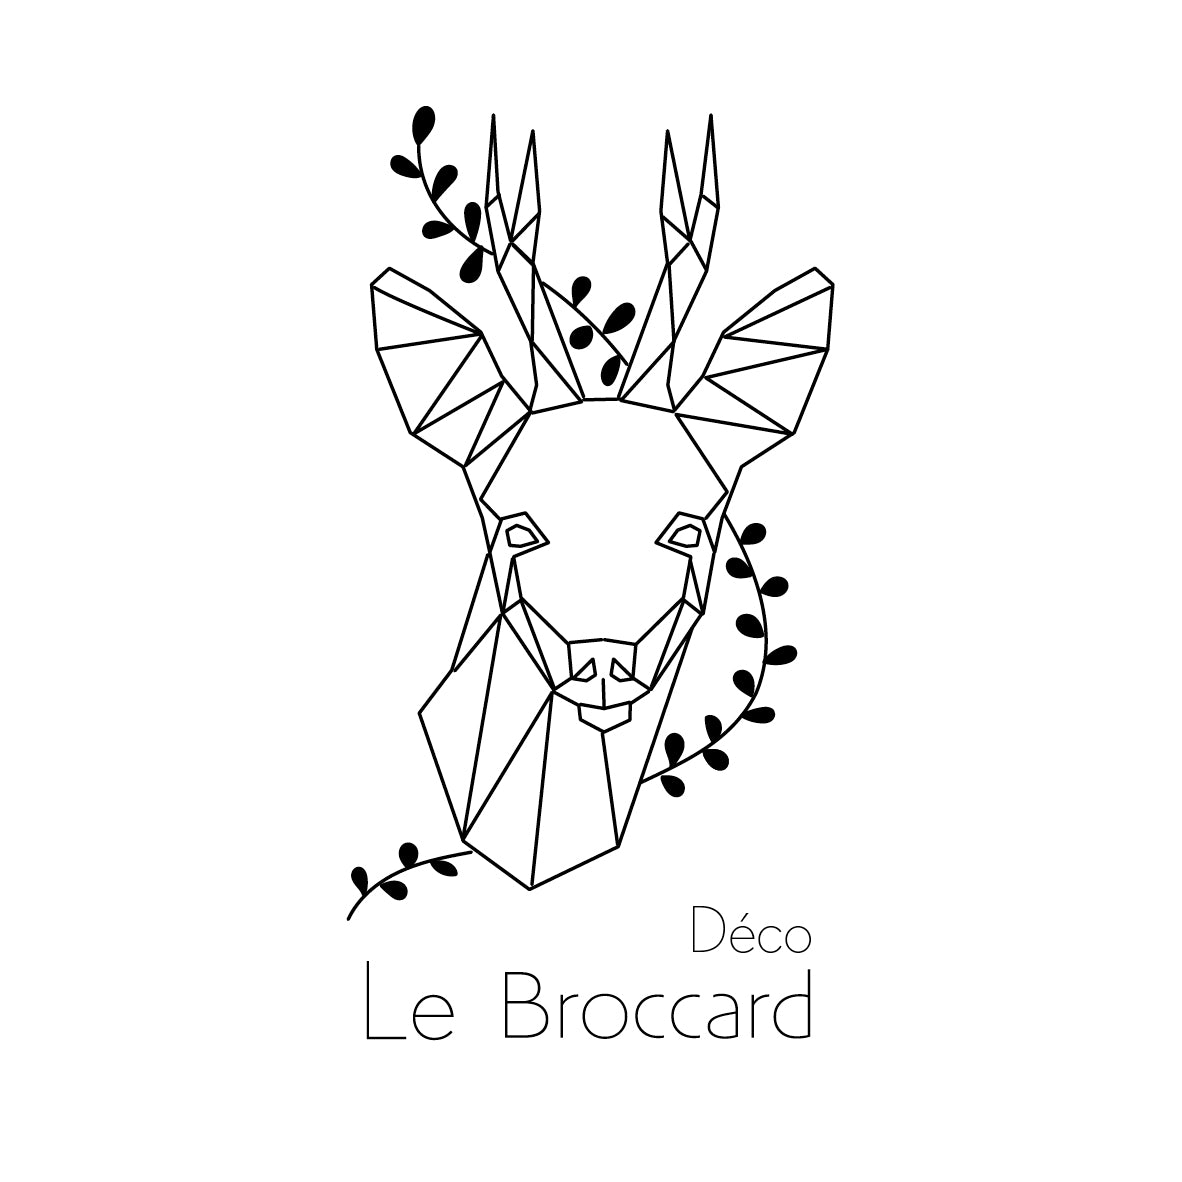 Le Broccard